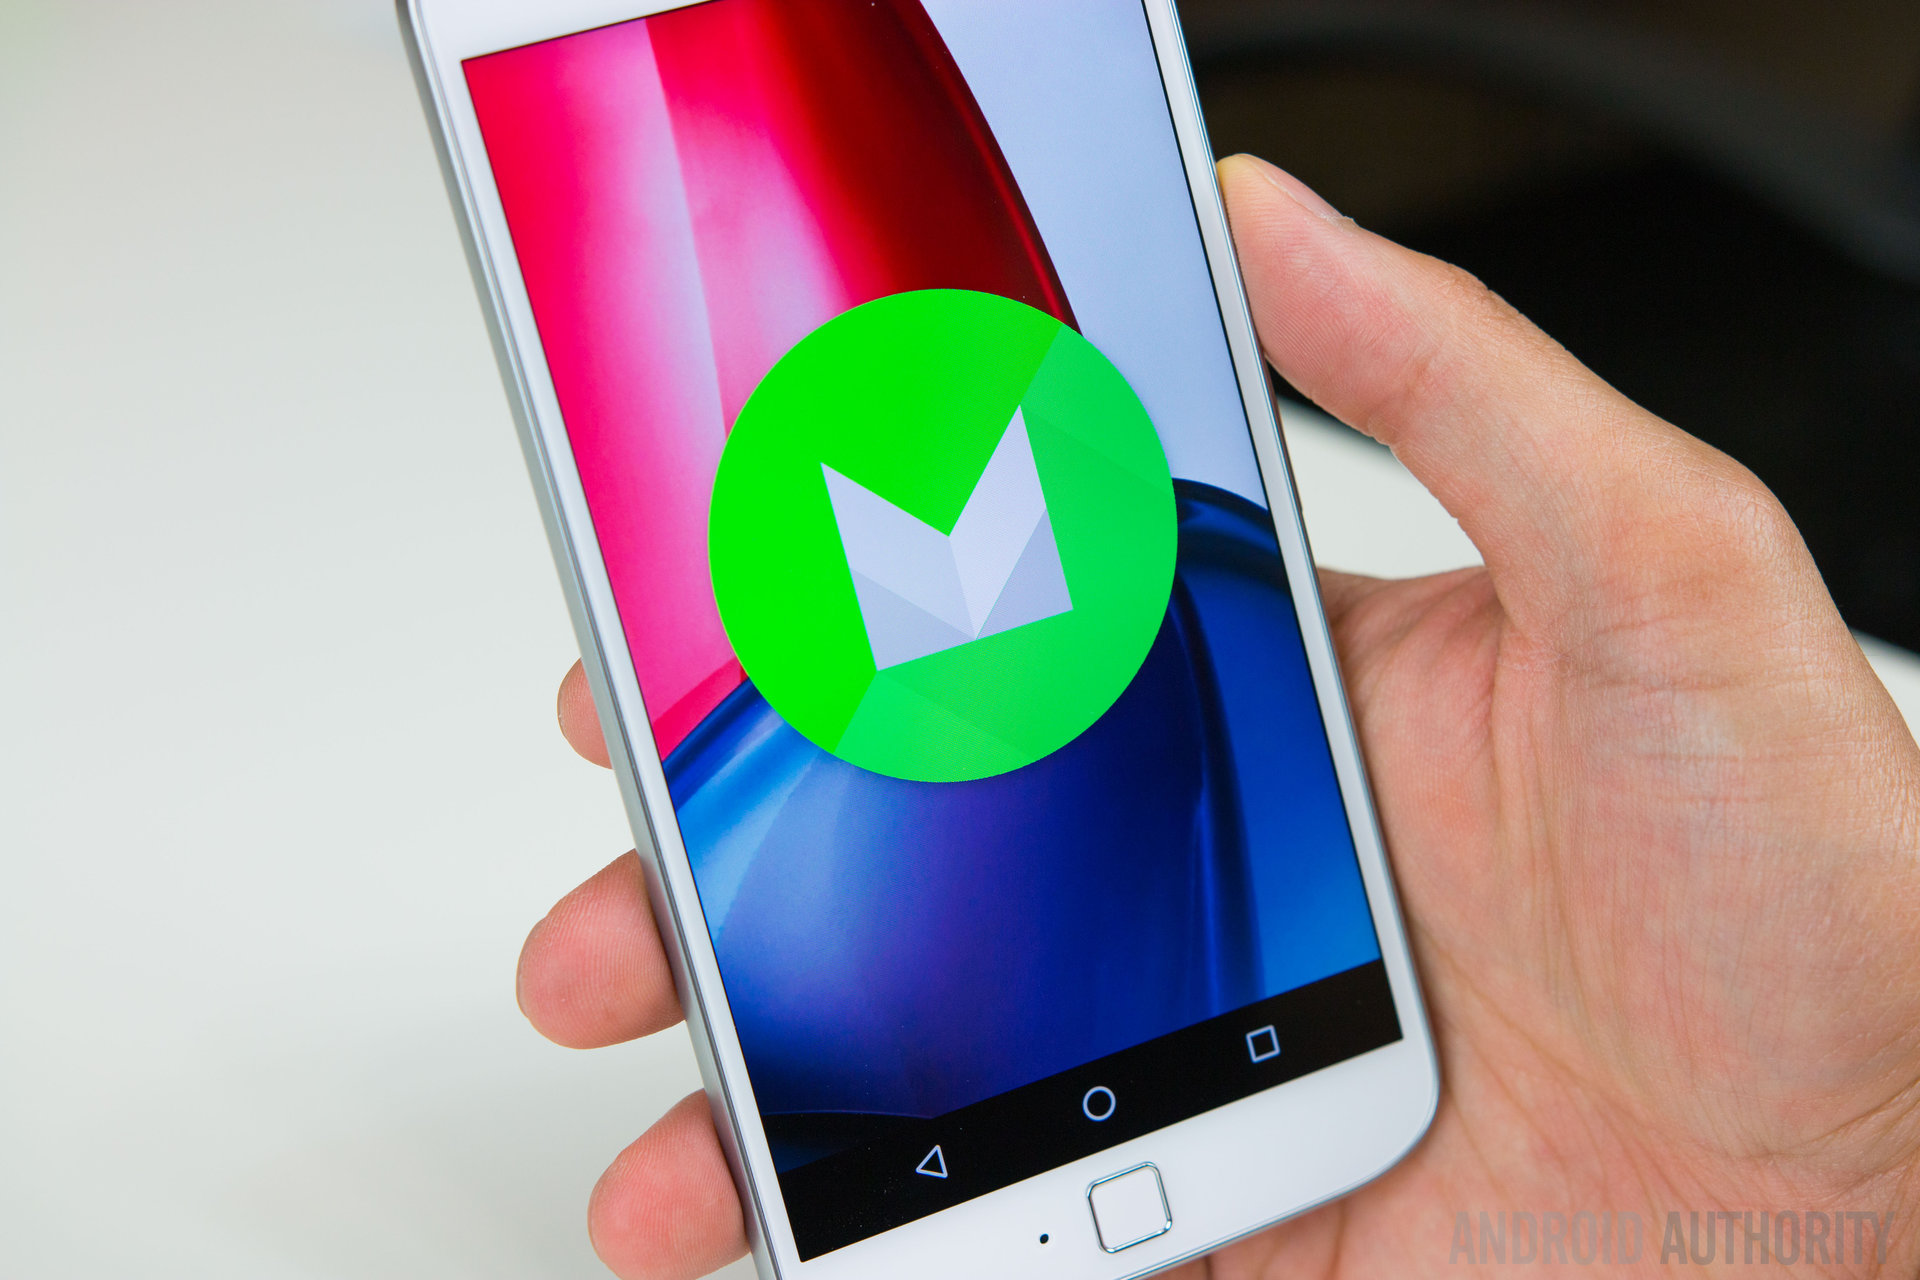 Bank Preventie stromen Motorola Moto G4 Plus review - Android Authority